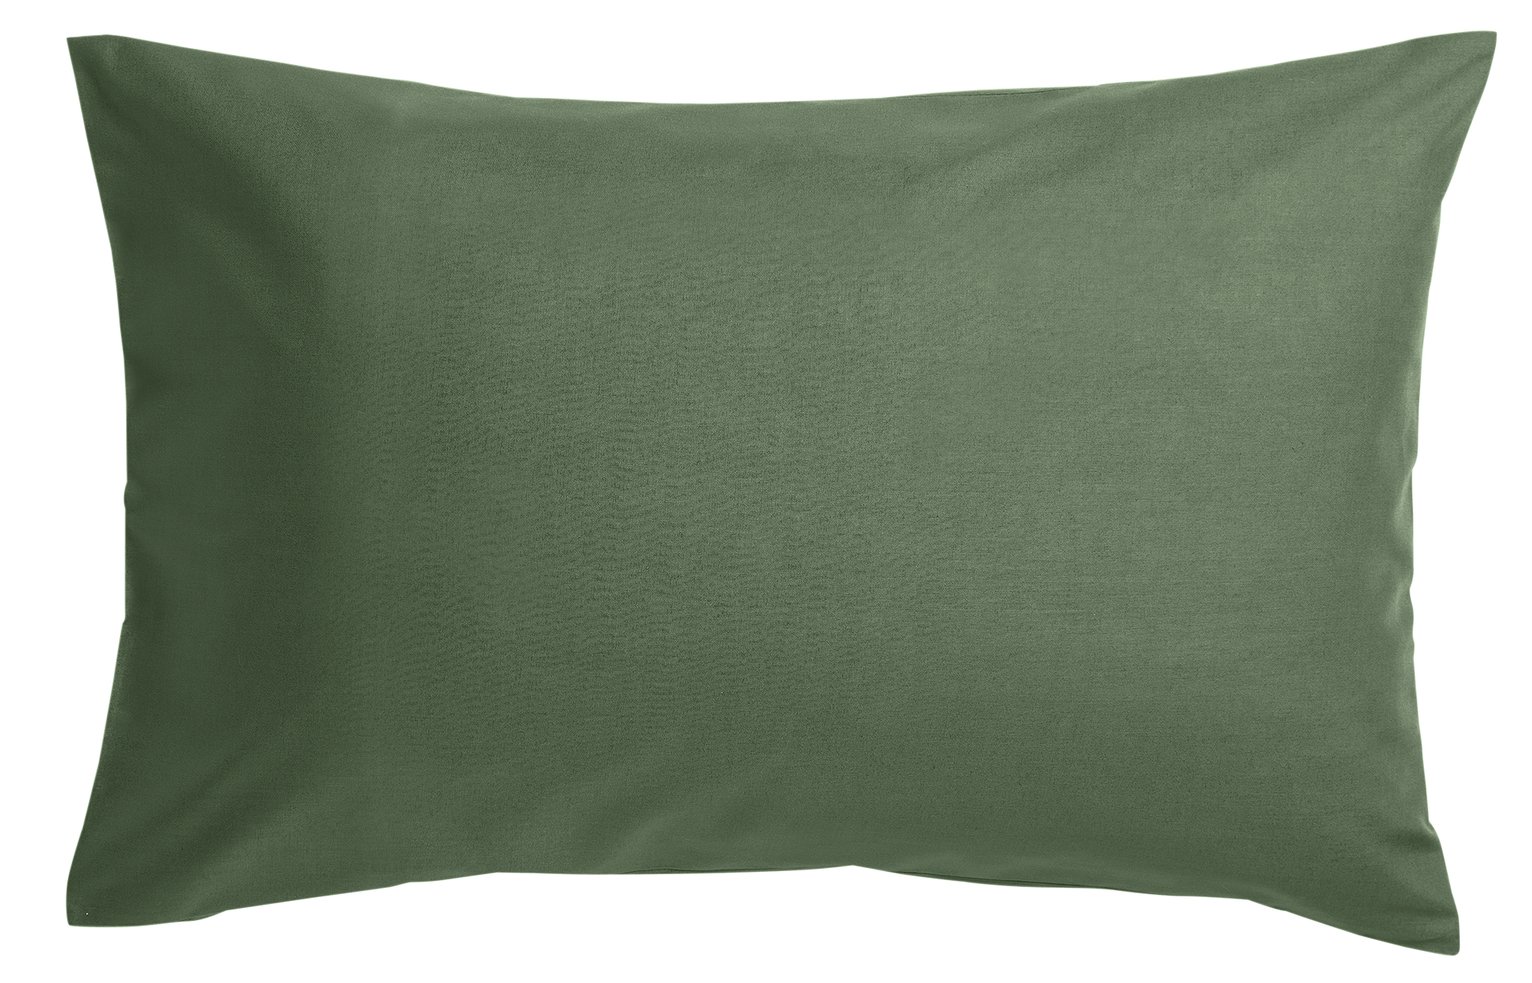 Habitat Polycotton Standard Pillowcase Pair - Khaki